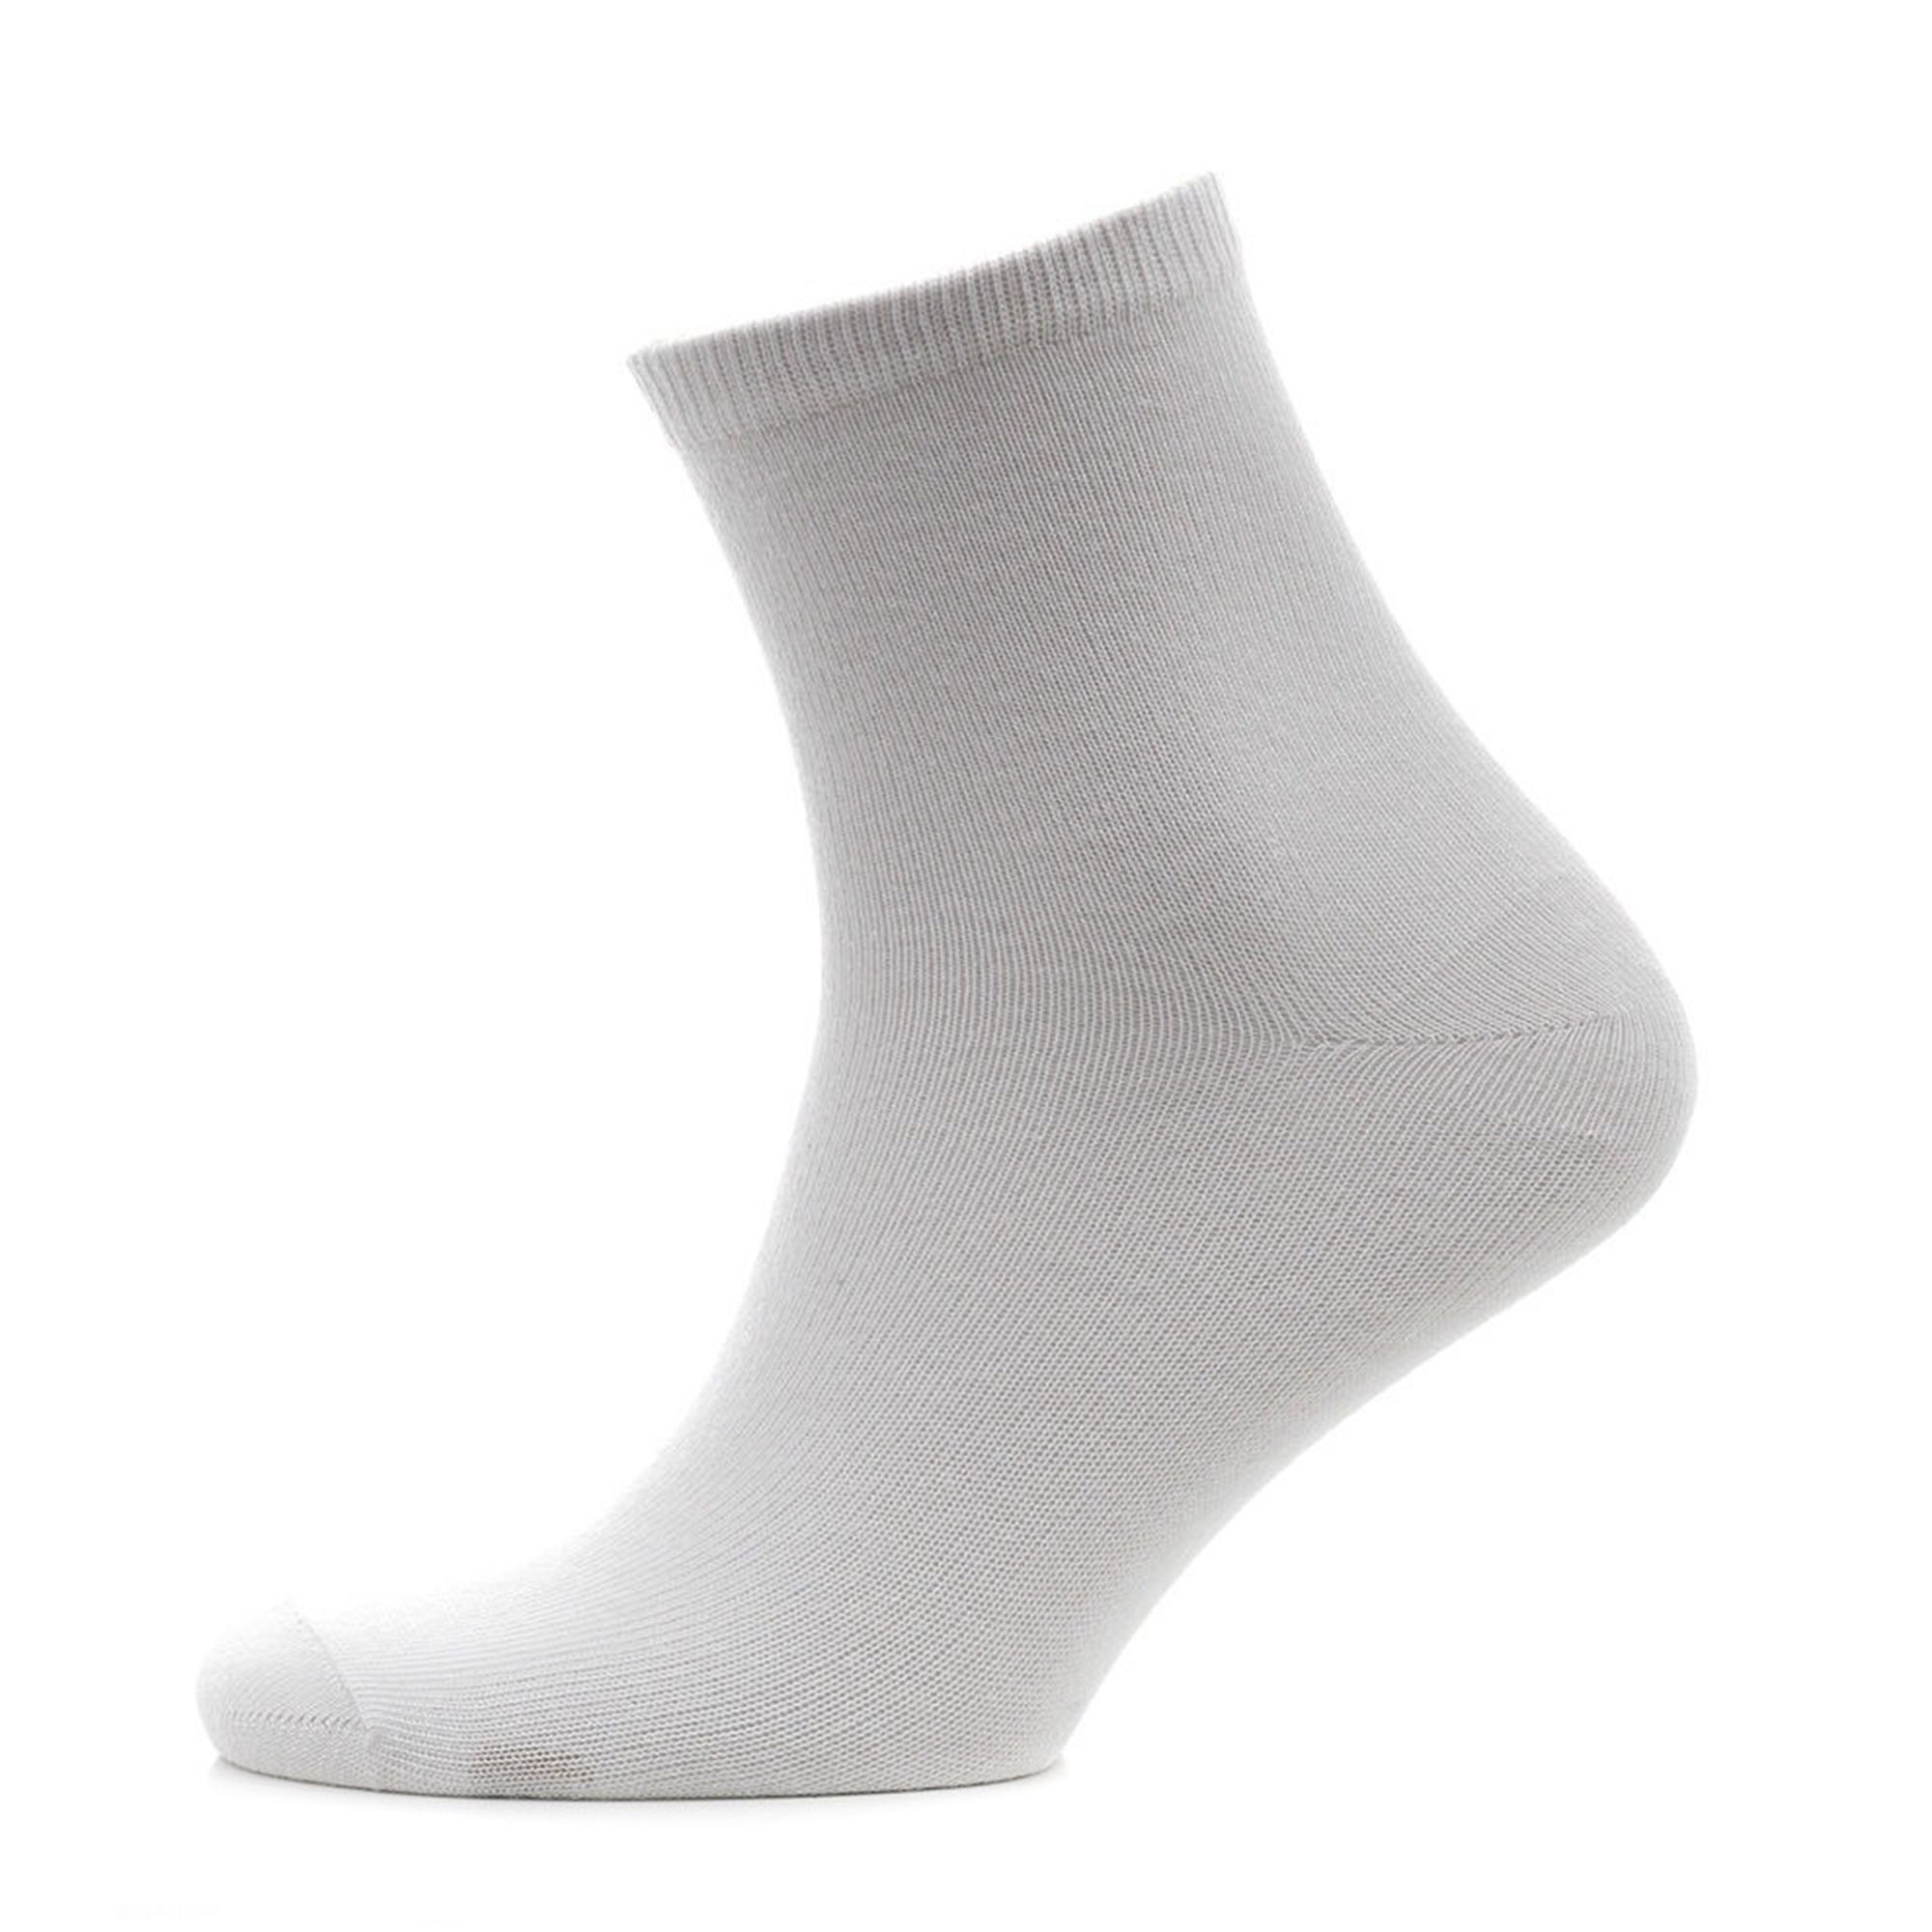 Носки Karmen Calza Look bianco S 35-37, цвет белый, размер 35-37 - фото 1